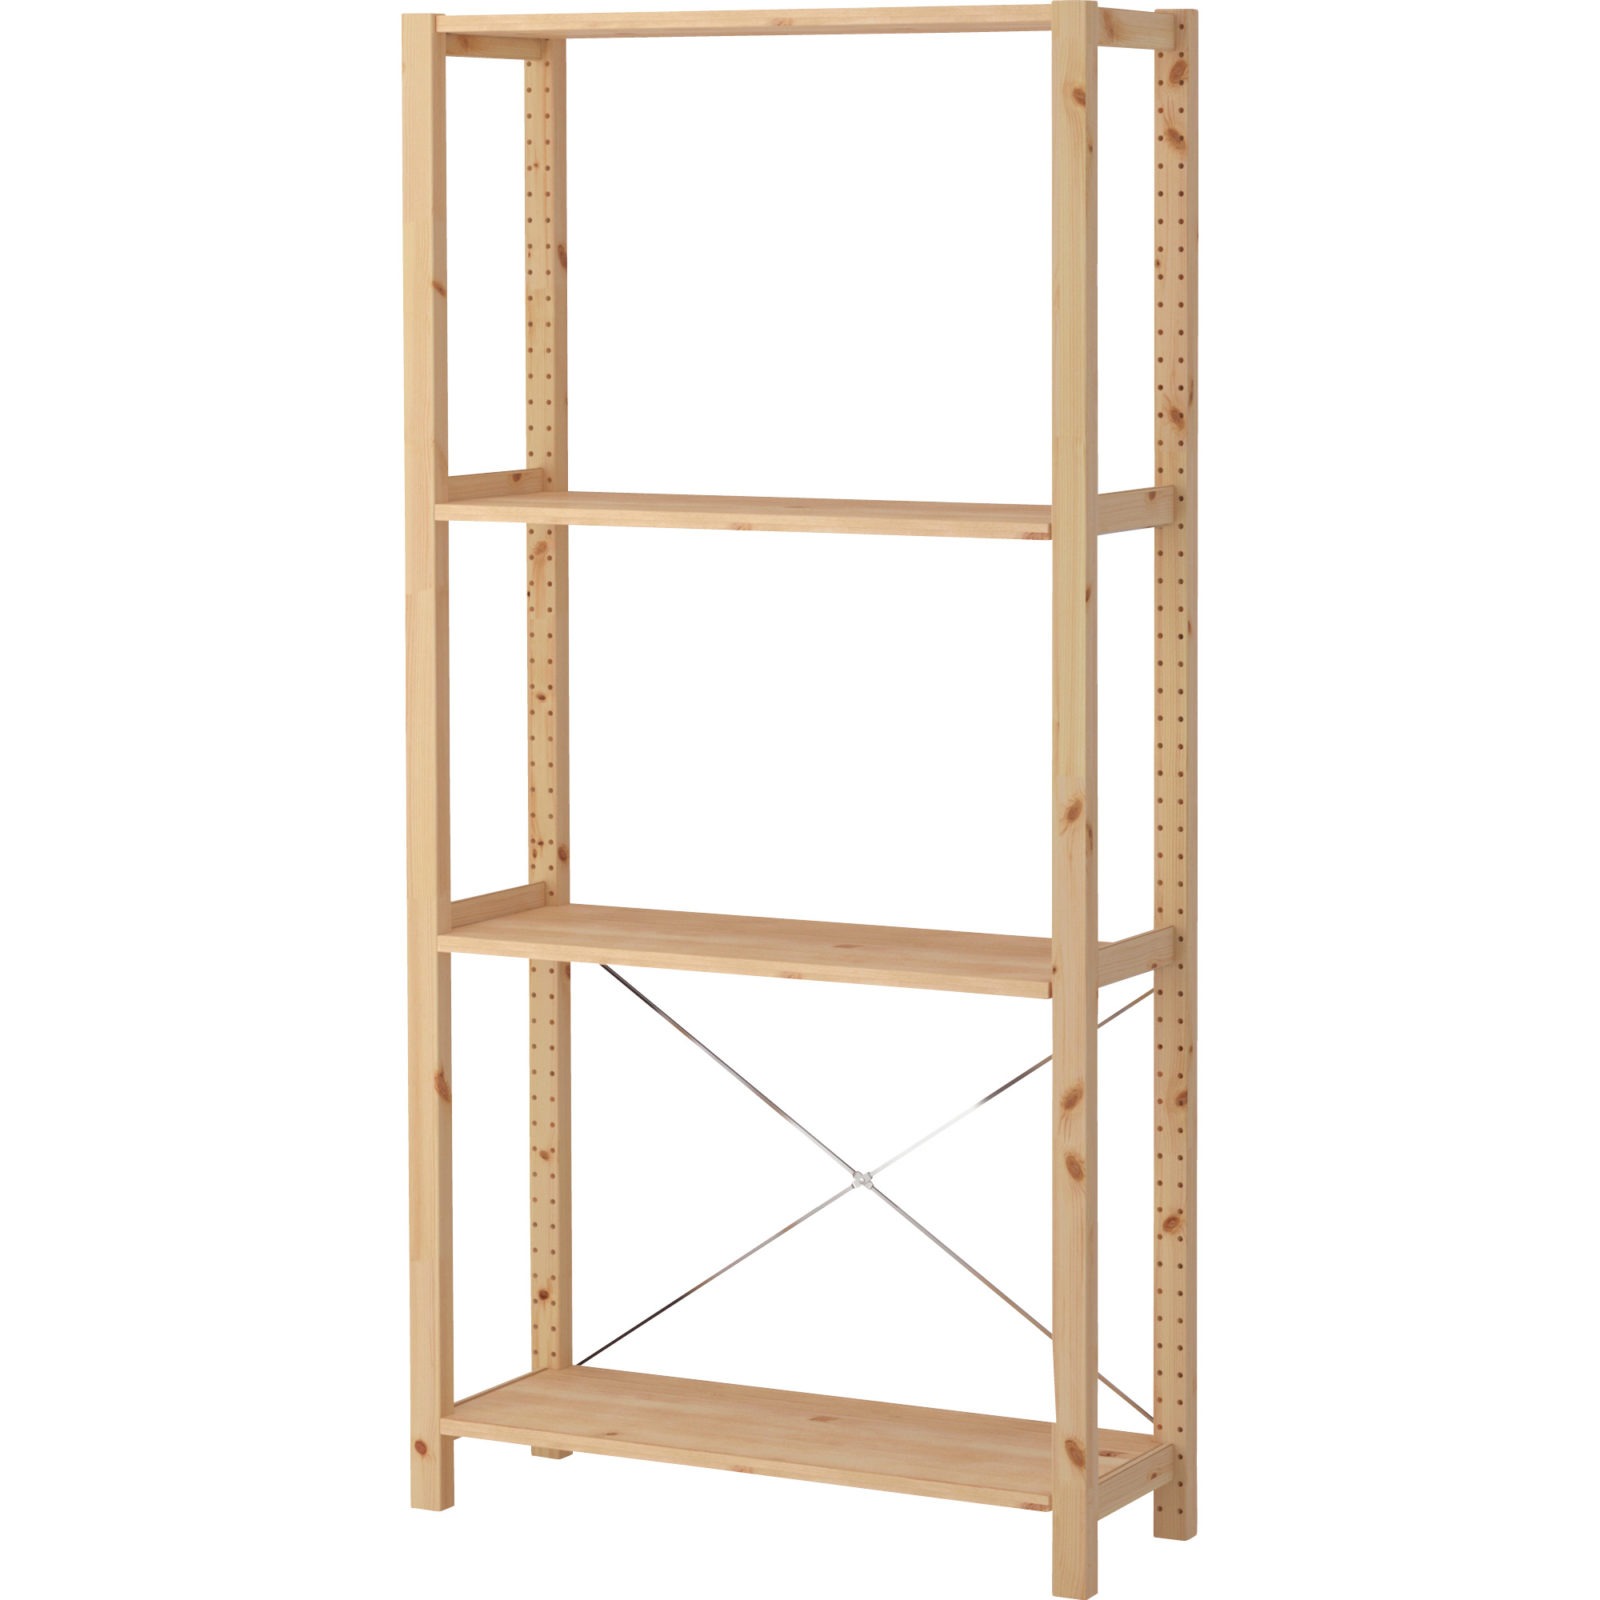 Simple rustic wooden storage shelf, IVAR.